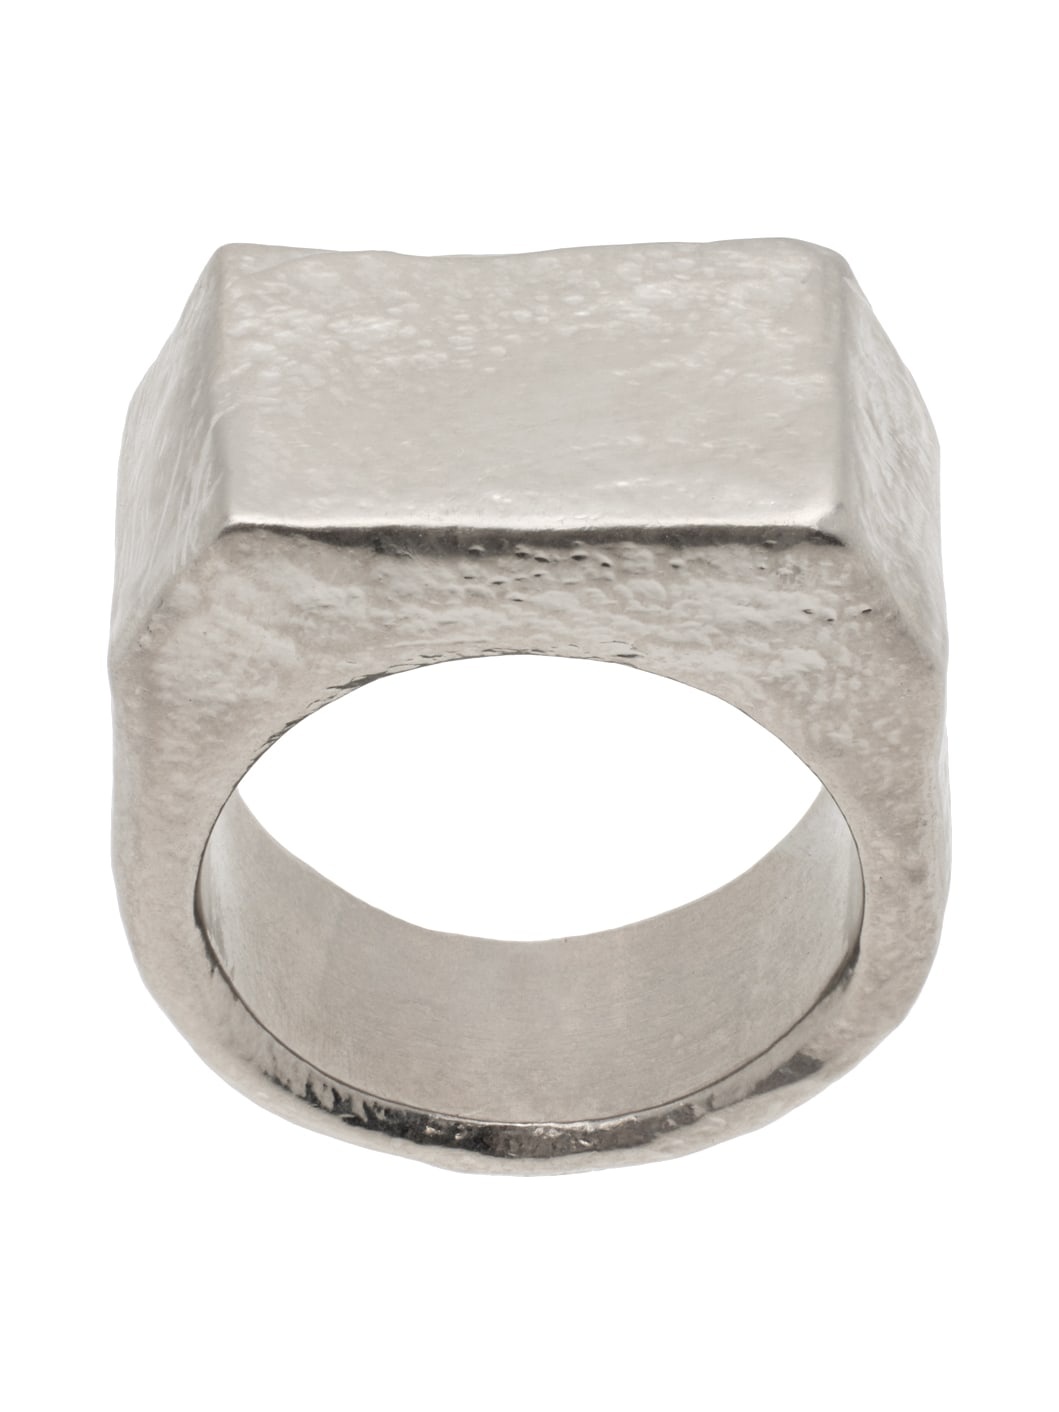 Silver Metal Chiseled Ring - 1